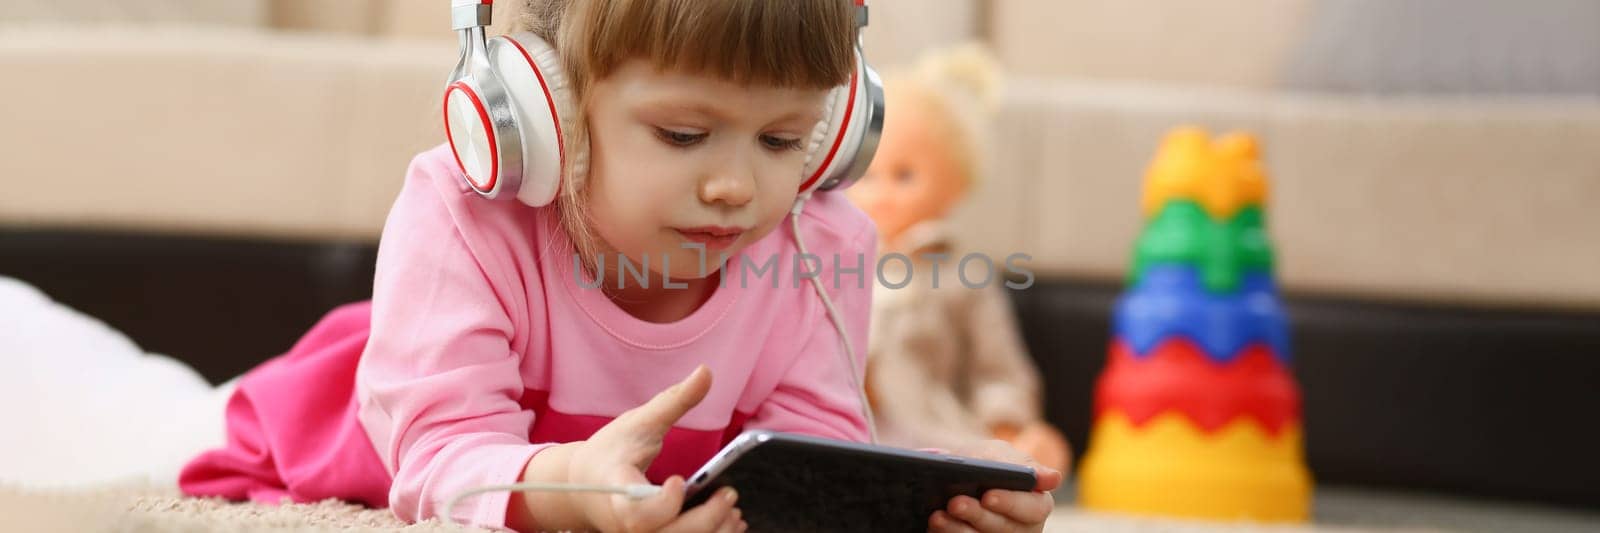 Little girl in headphones holds smartphone lying on floor by kuprevich